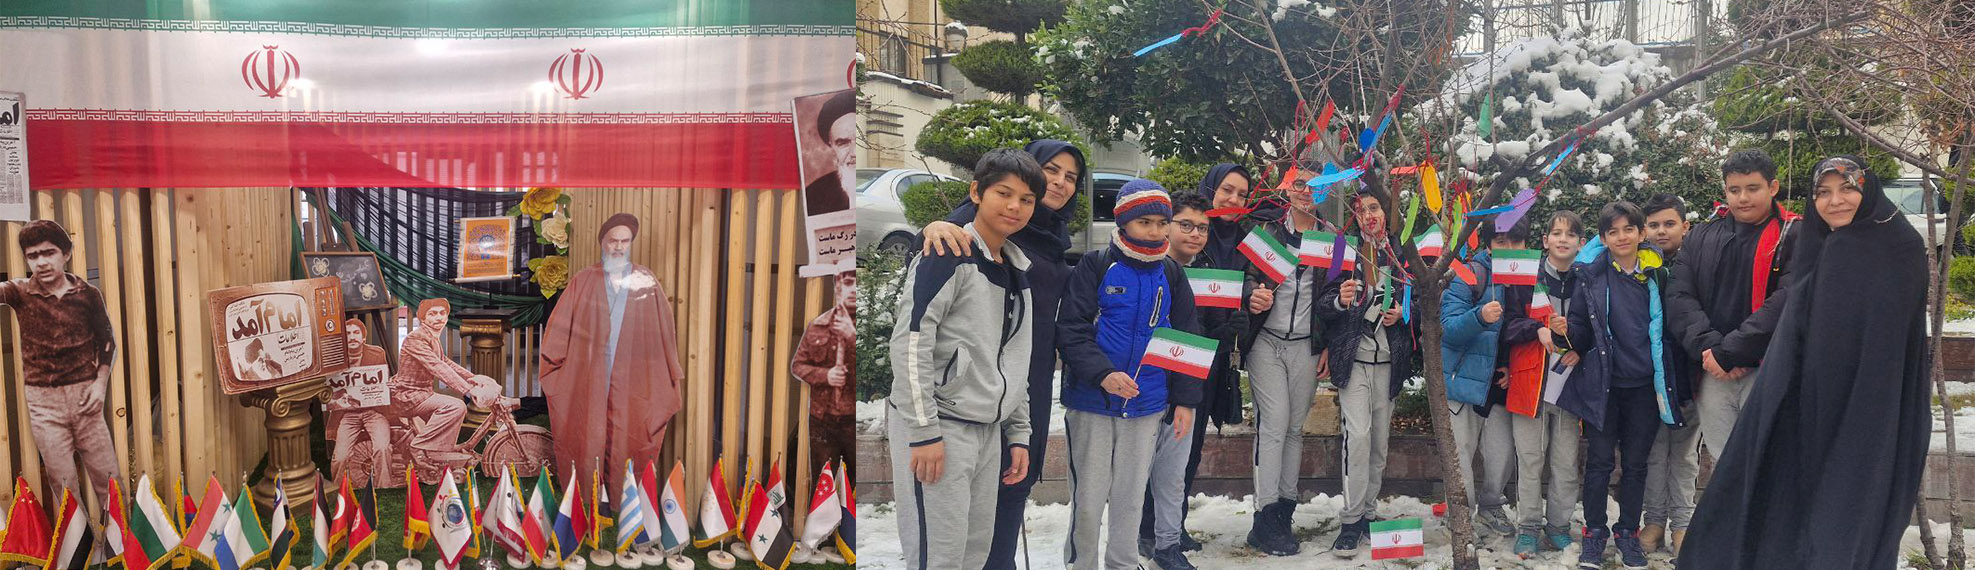 12th Bahman celebration Congratulation on the glorious Iranian revelution.